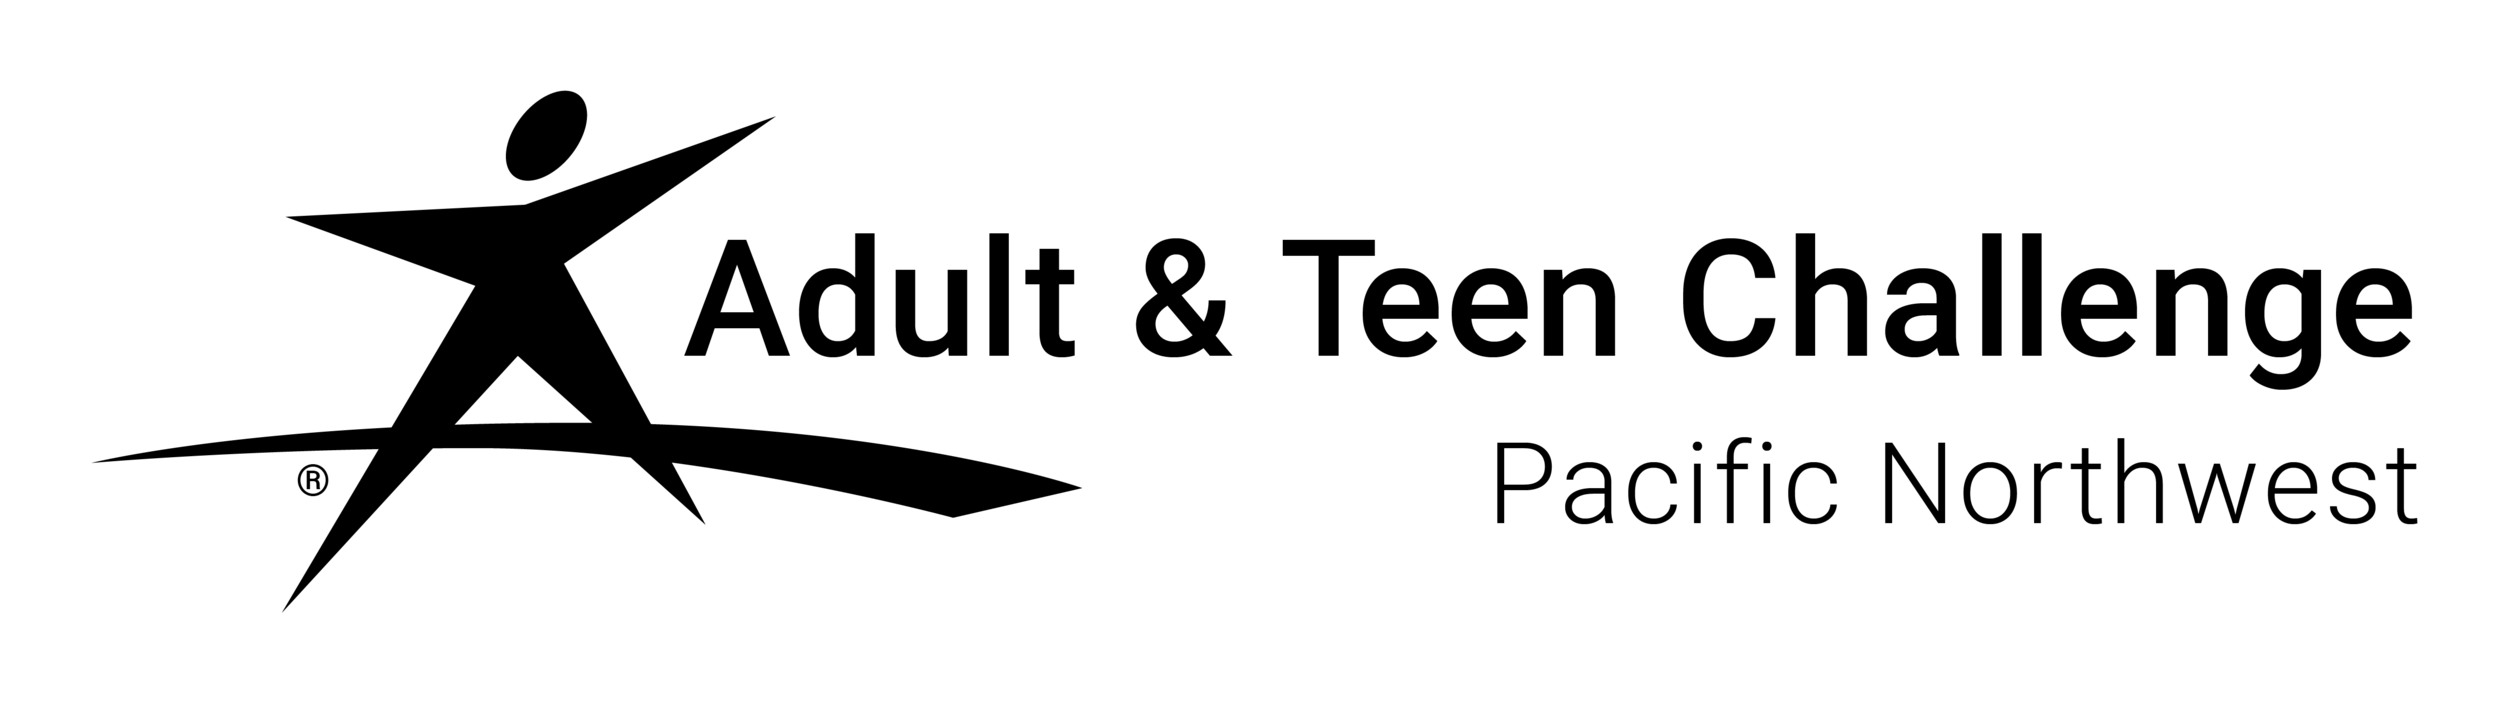 PNWATC_Logo-black_wide.png